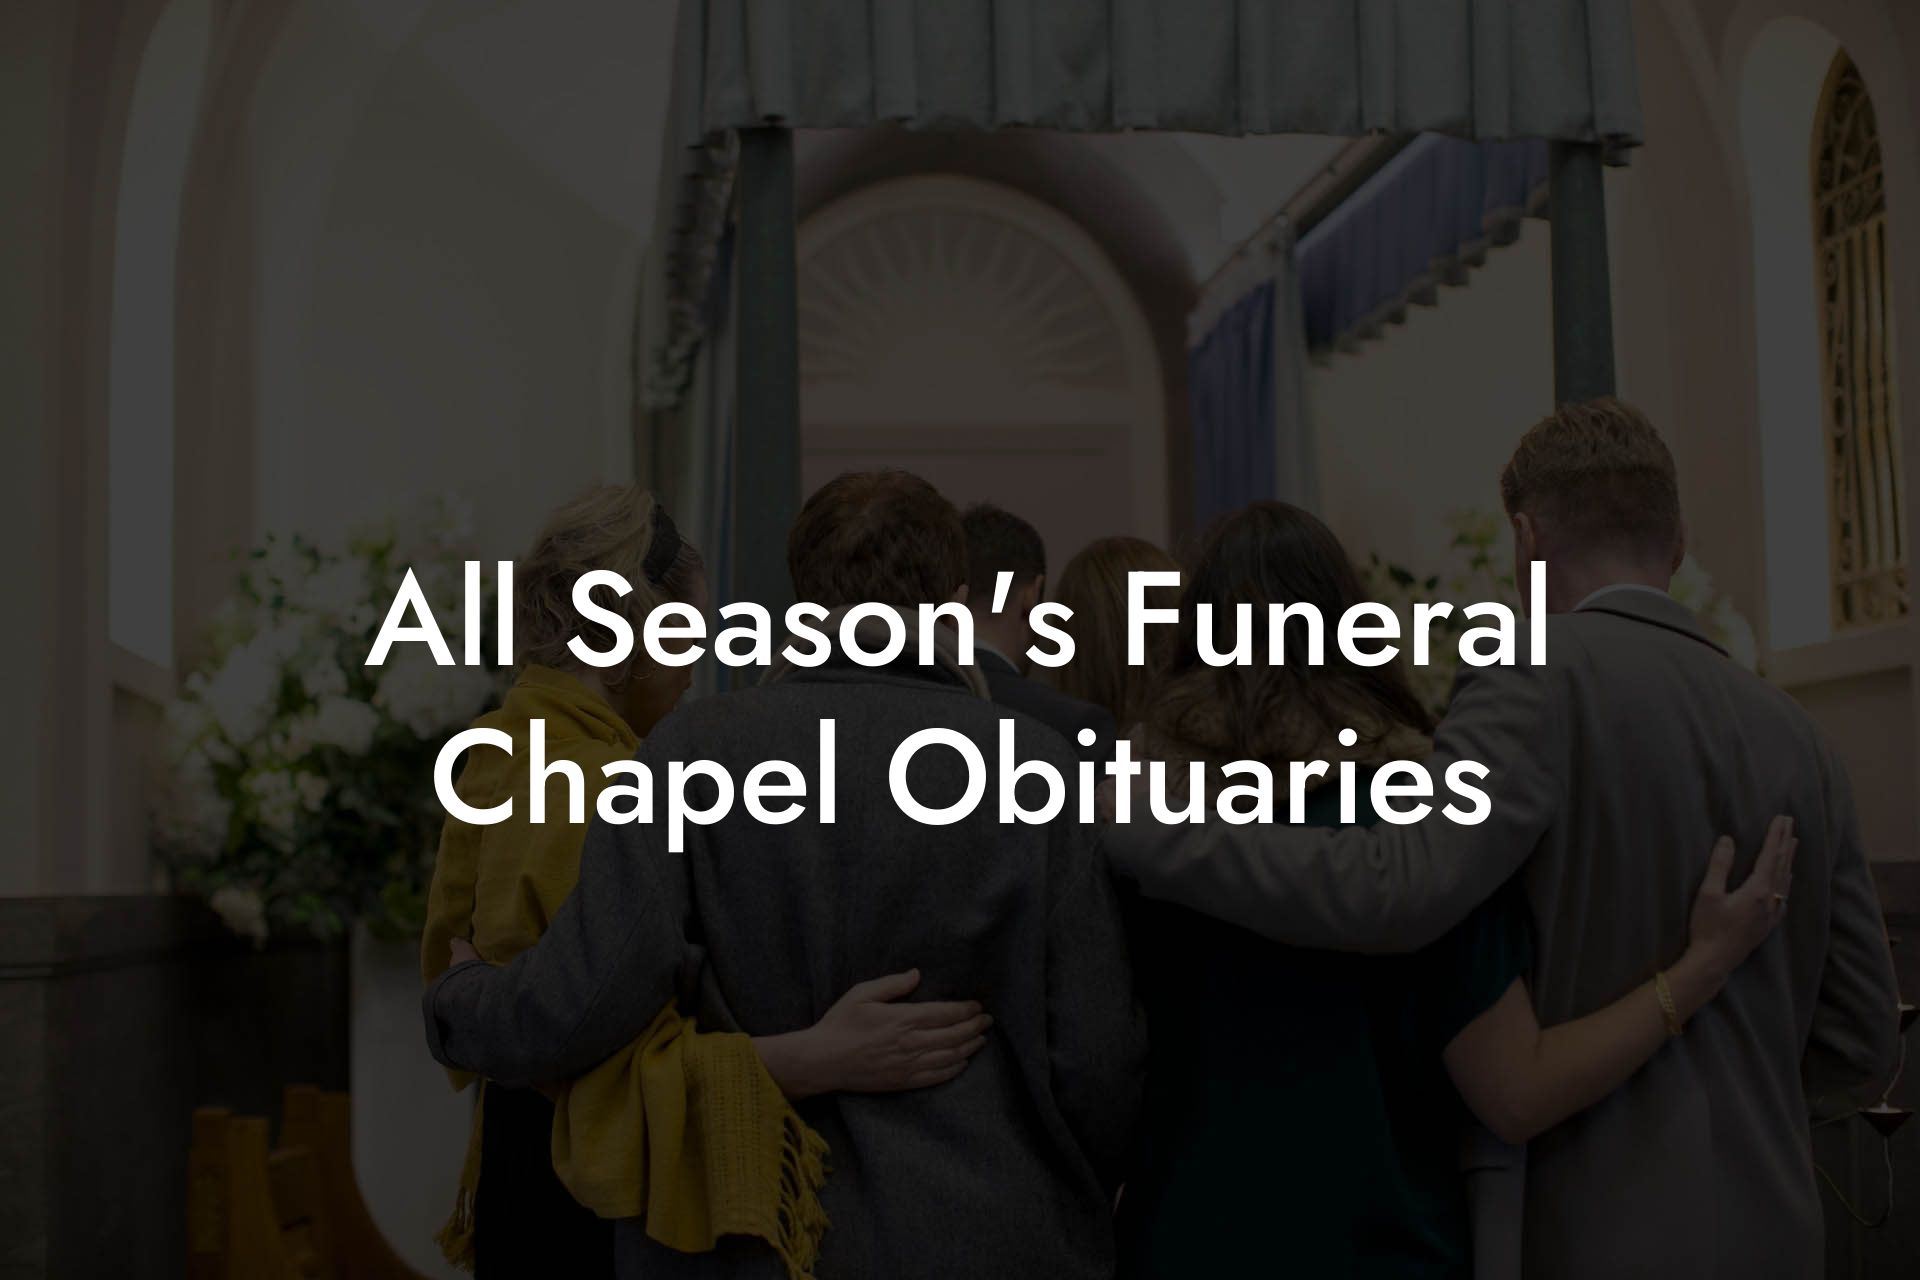 All Season's Funeral Chapel Obituaries